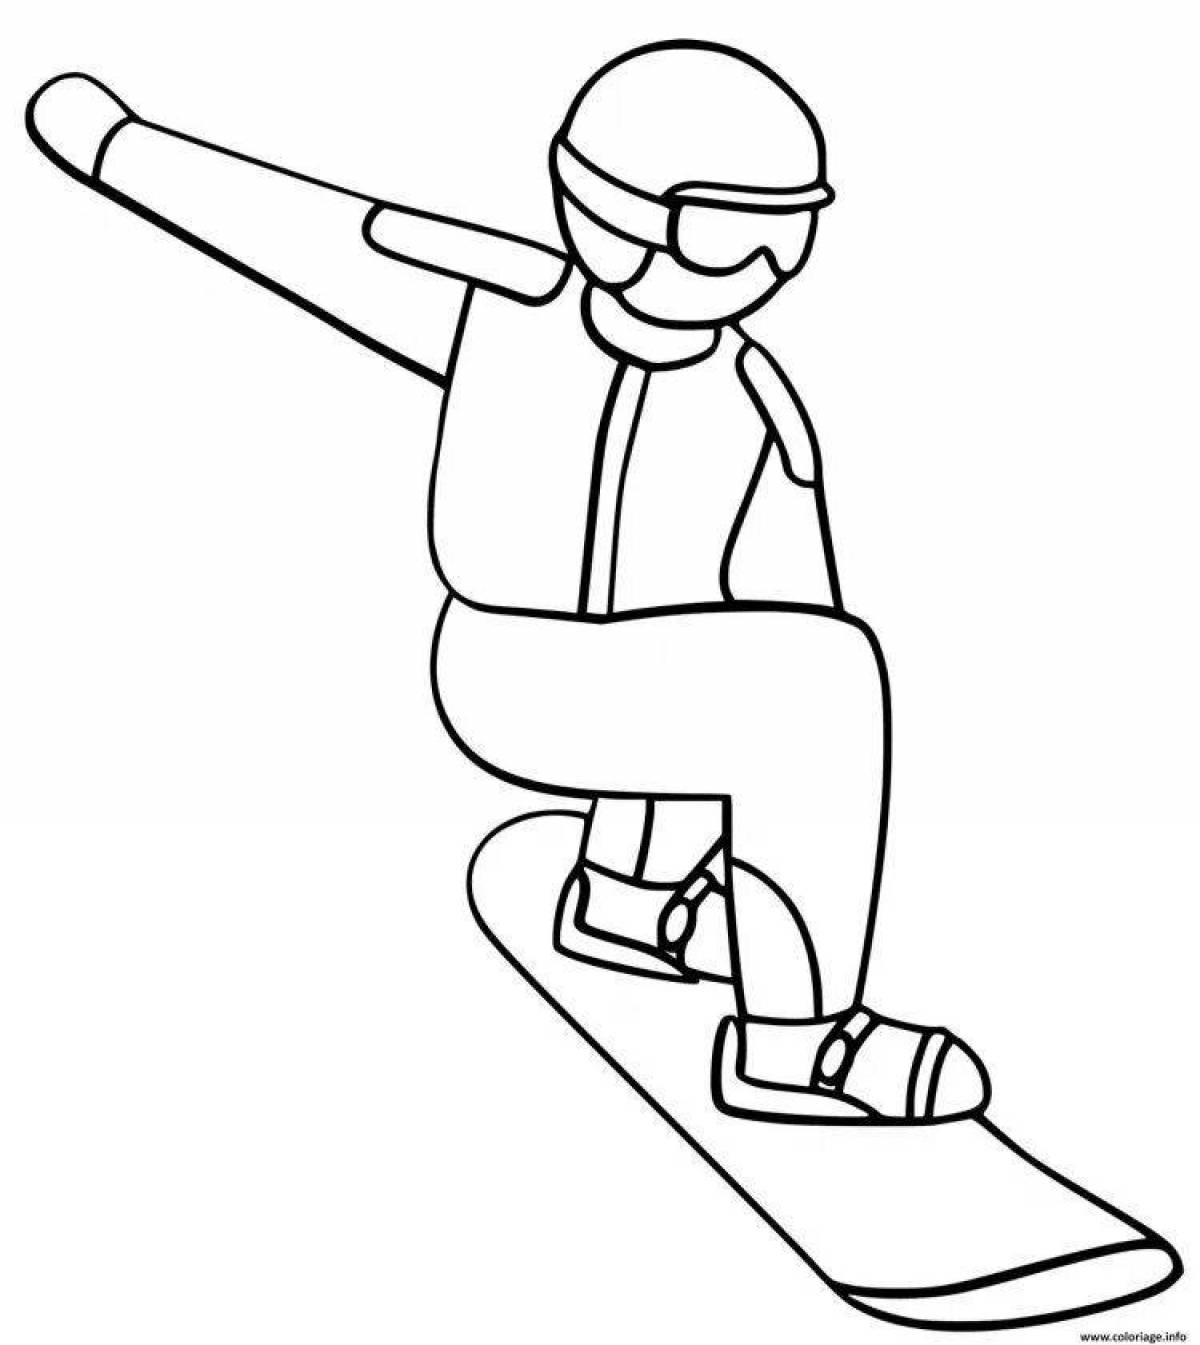 Snowboard #4